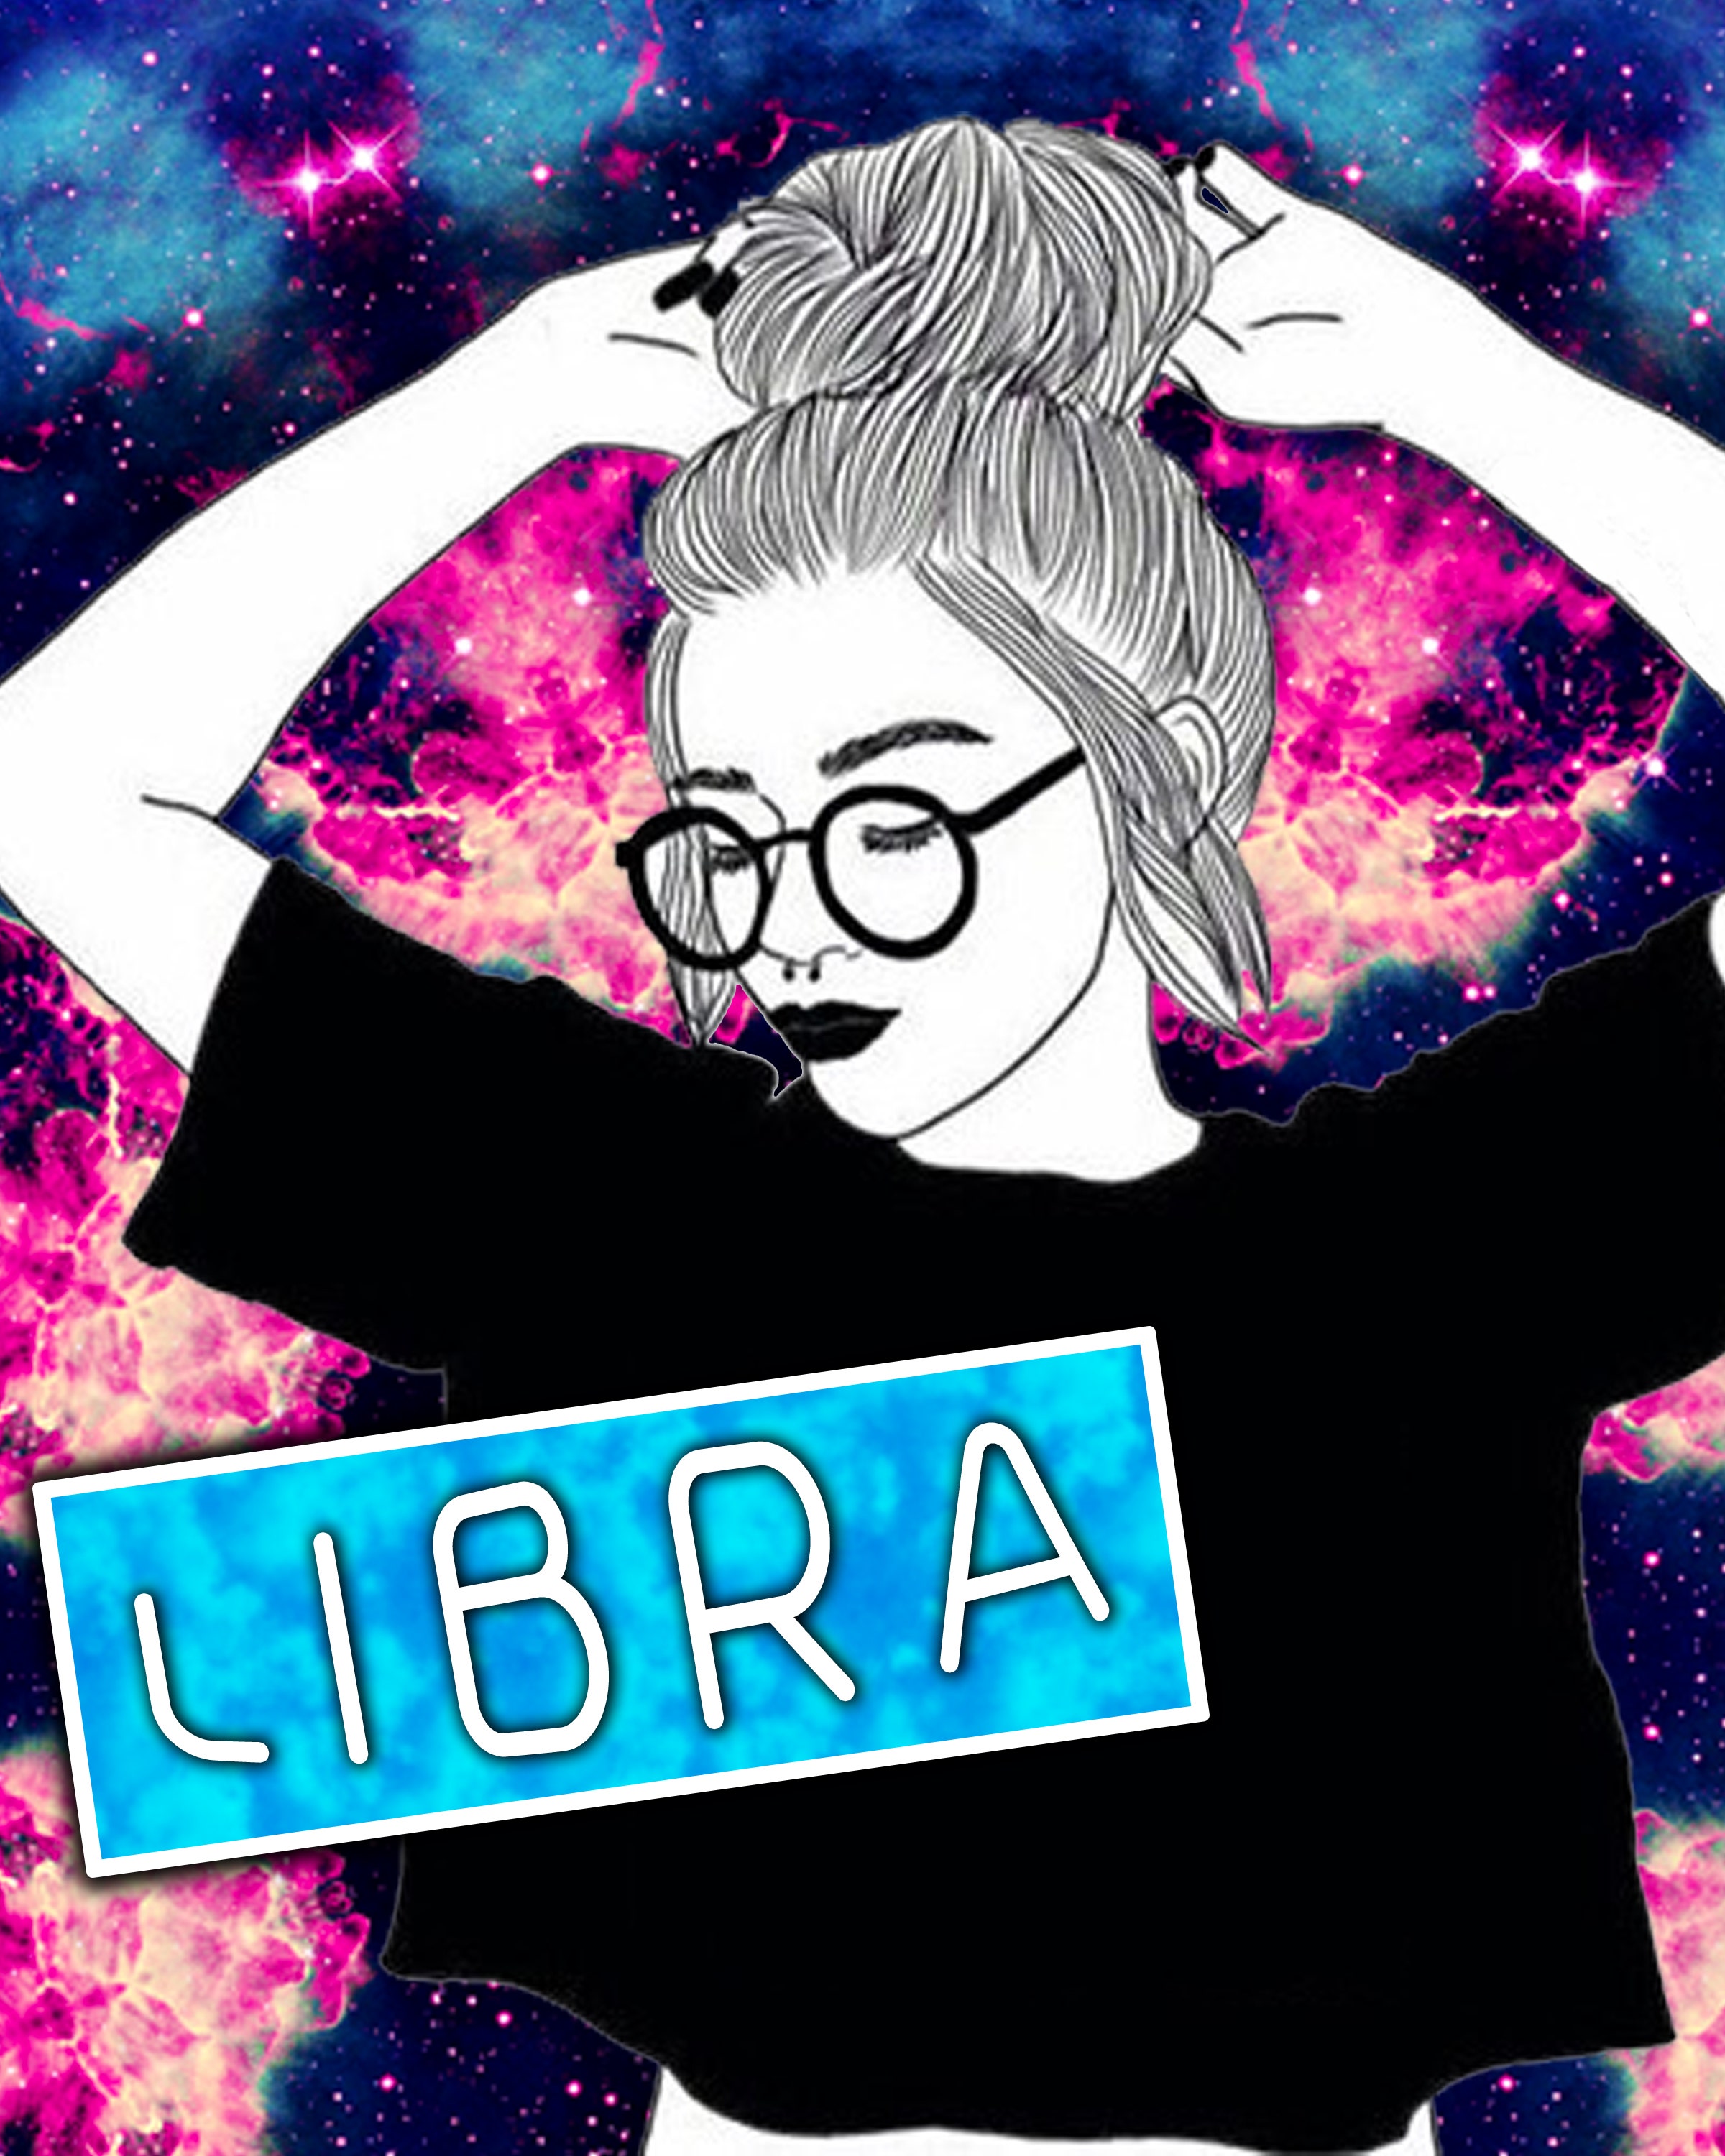 Libra zodiac sign don't take life too seriously